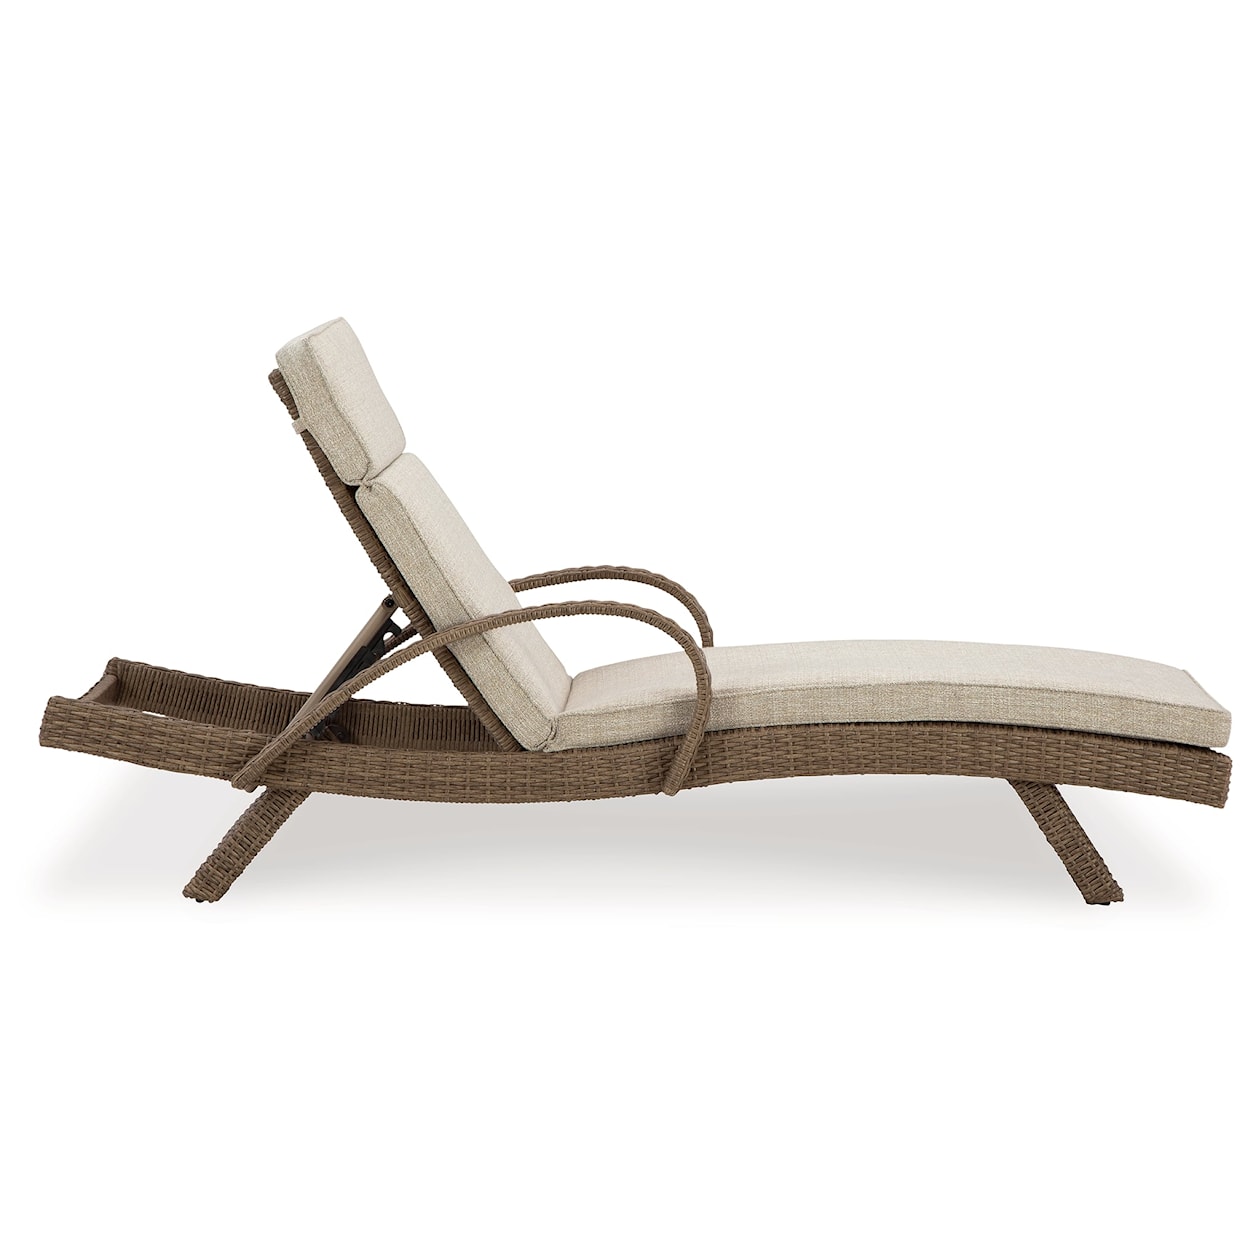 Ashley Furniture Signature Design Beachcroft Chaise Lounge with Cushion